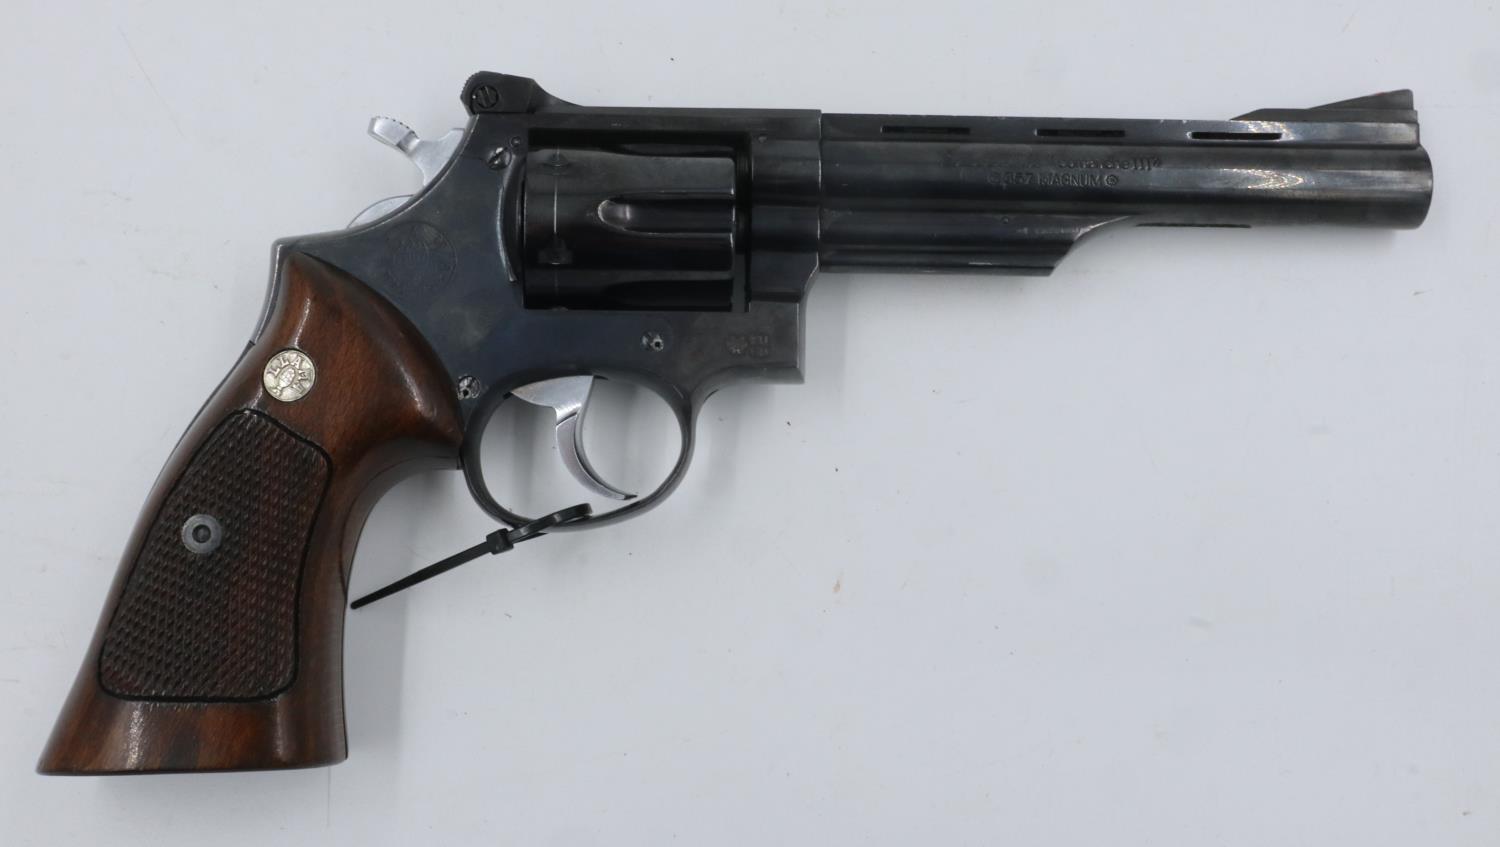 Llama Comanche III 357 Magnum revolver, with EU deactivation certificate no 182181. UK P&P Group